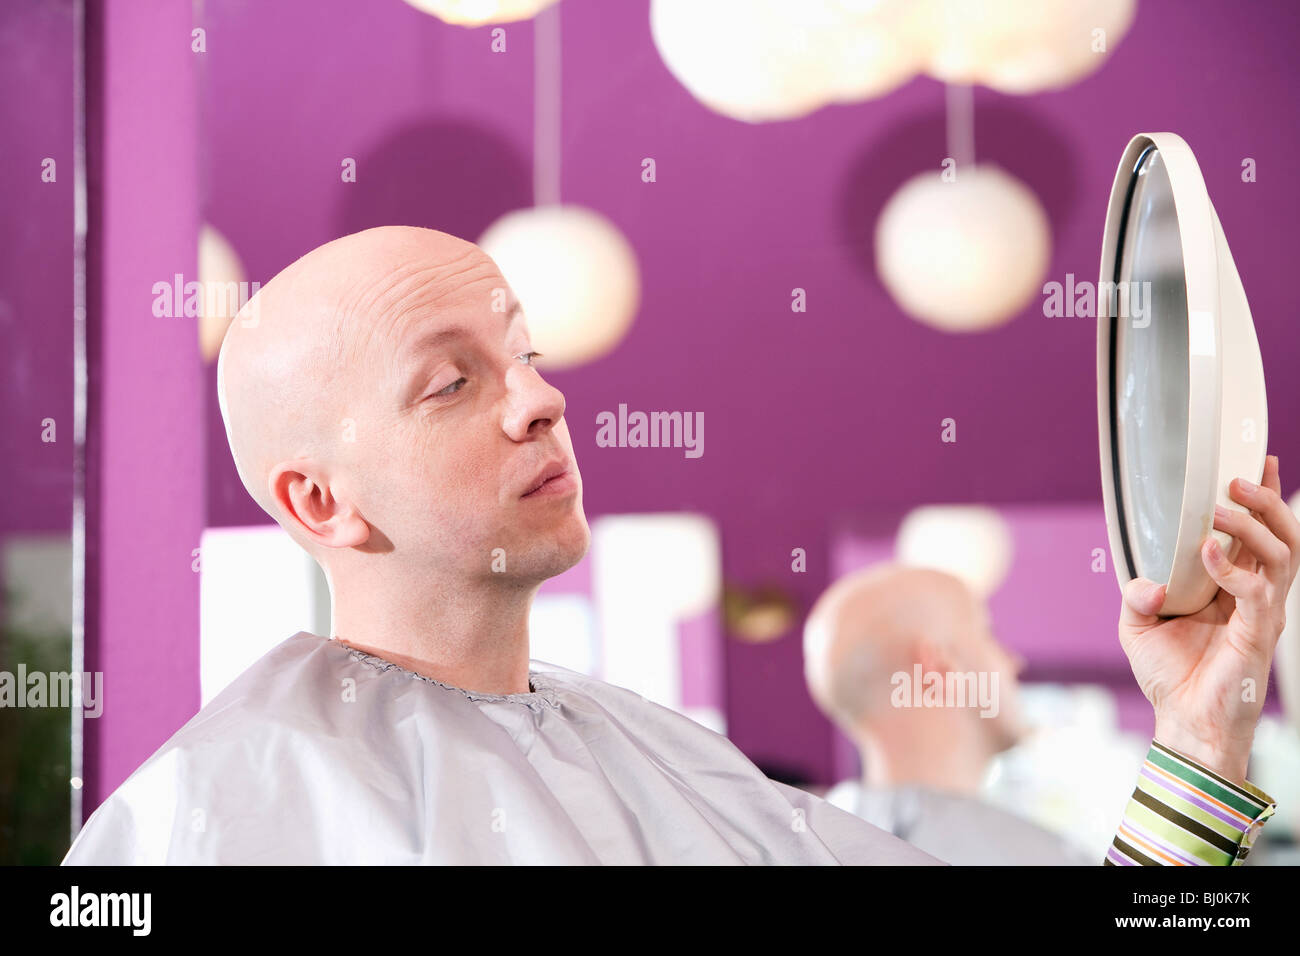 bald man at hair salon looking into mirror Stock Photo